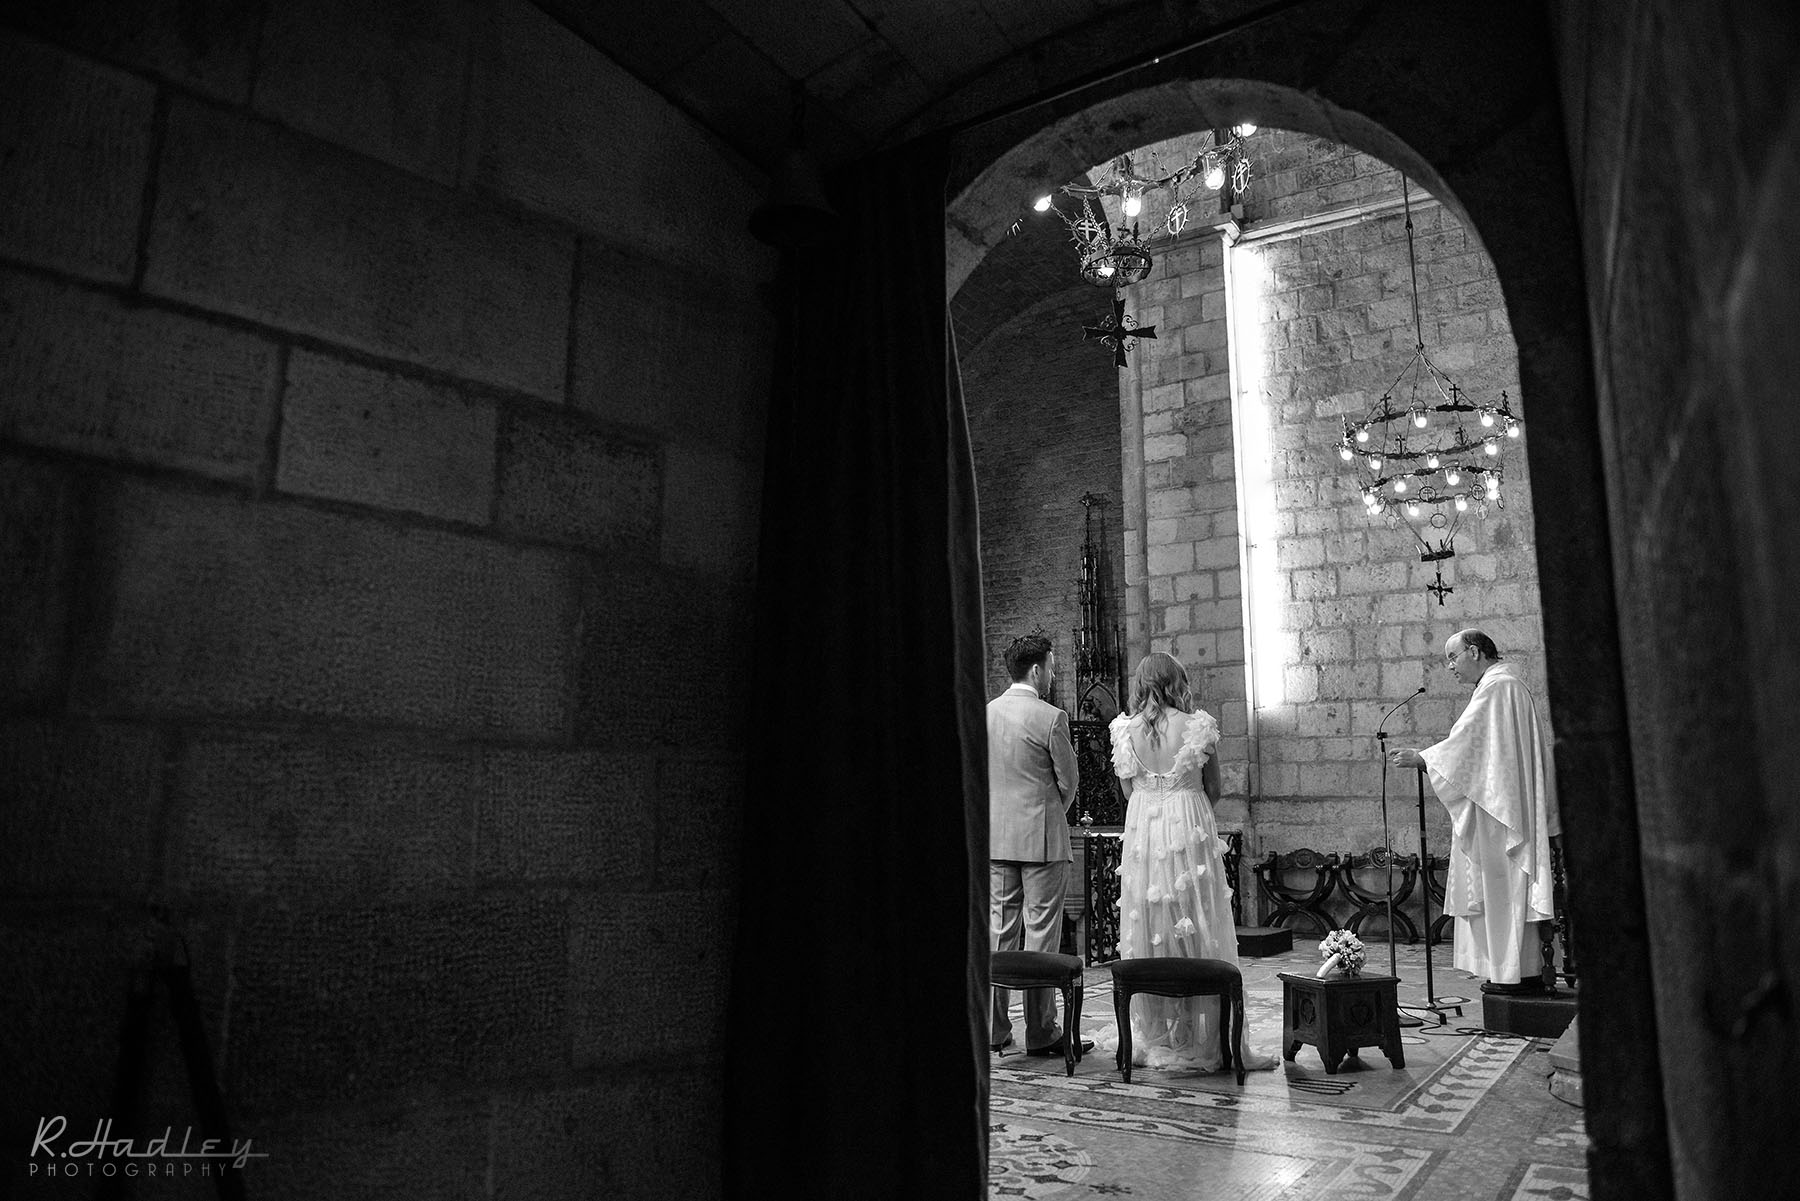 Wedding of Timmy and Sarah at Santa Anna Church and Restaurant Mirabe, Barcelona.